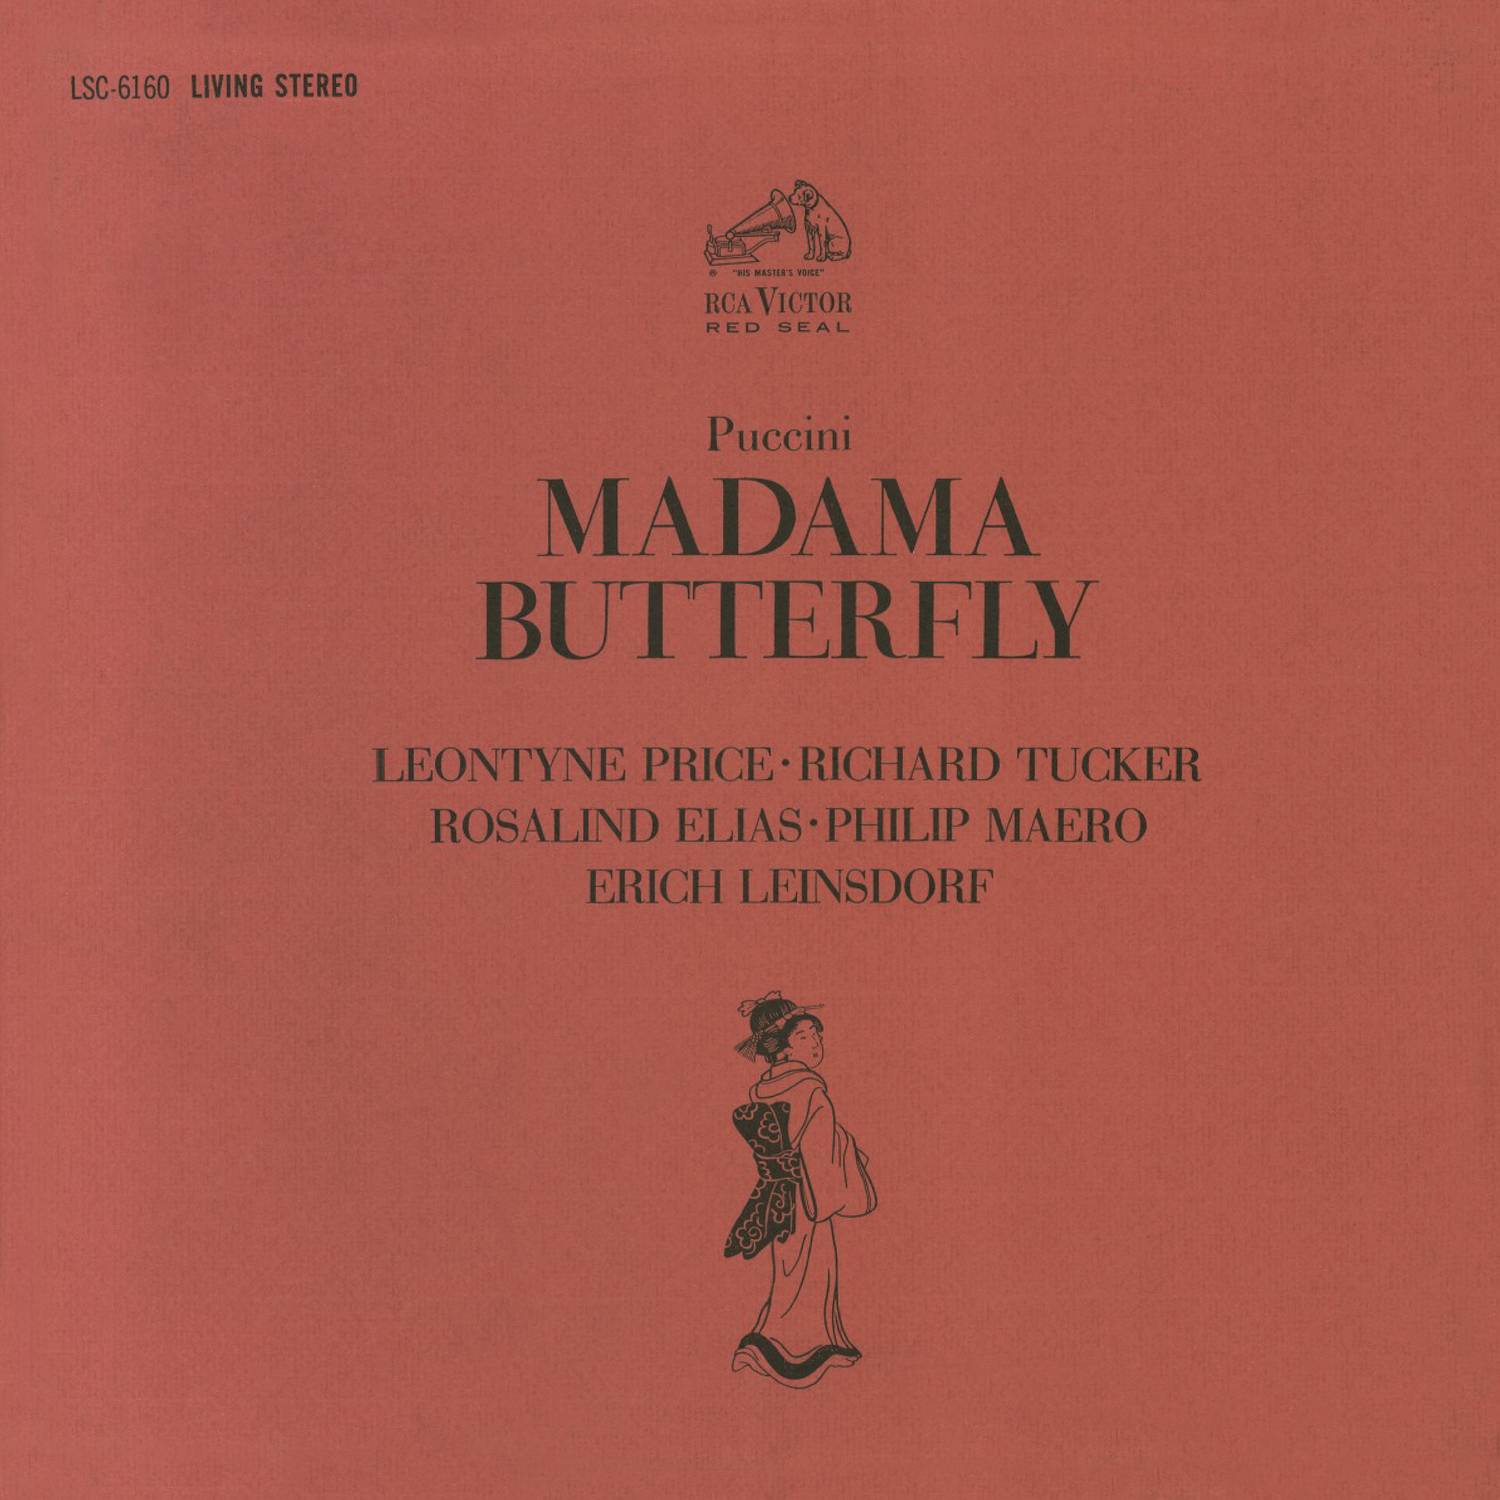 Madama Butterfly (Remastered): Act II - Yamadori, ancor le pene